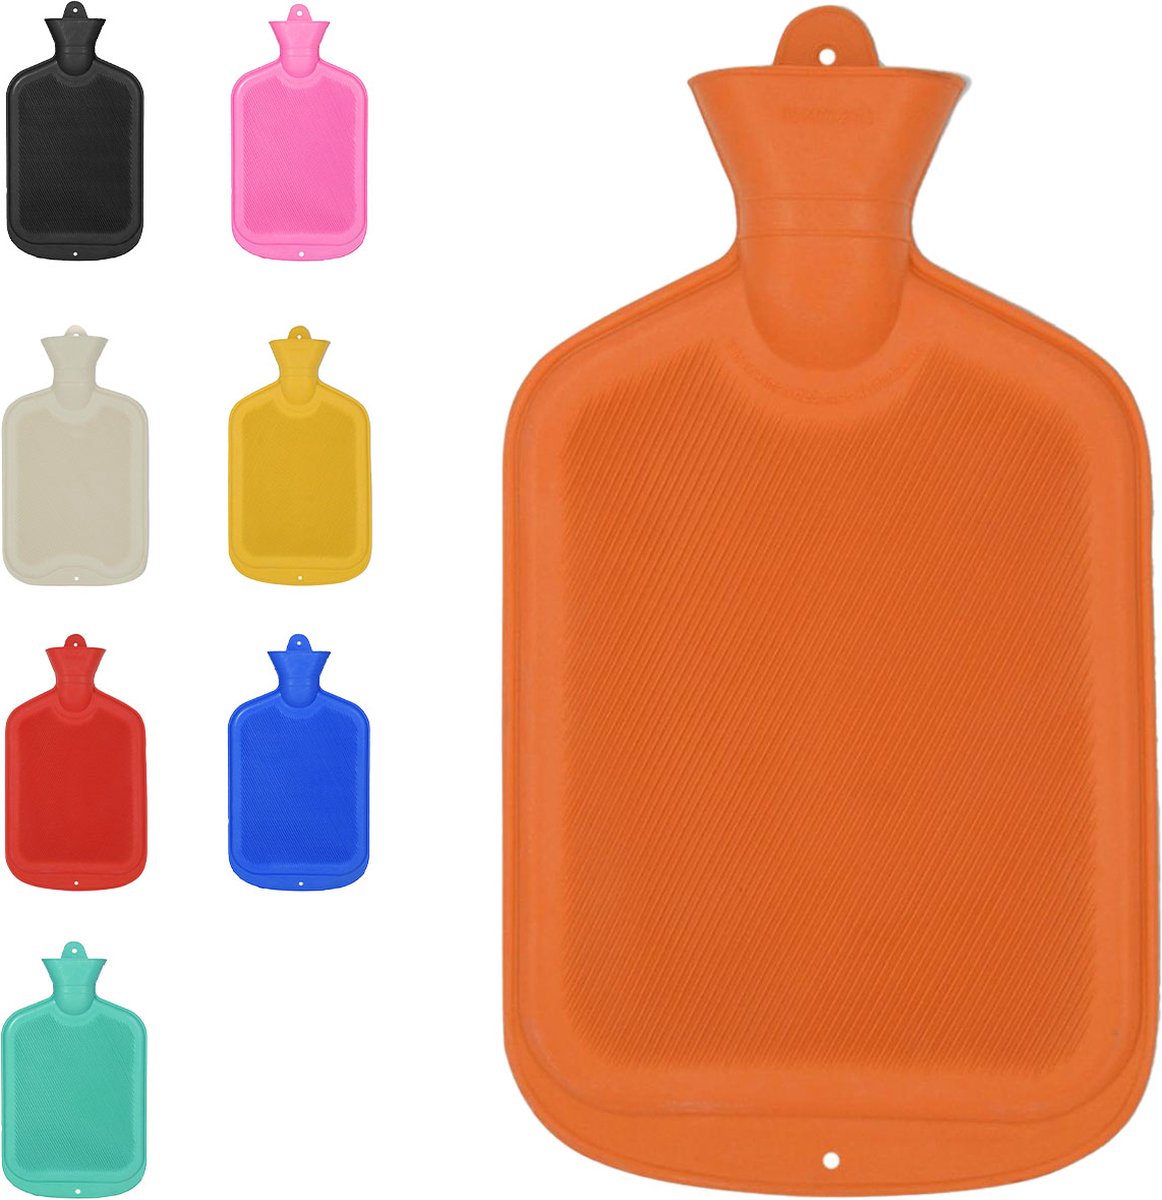 Warmtekruik | Kruik | Warmwaterkruik | Rubber | 2 liter | Oranje | Able & Borret